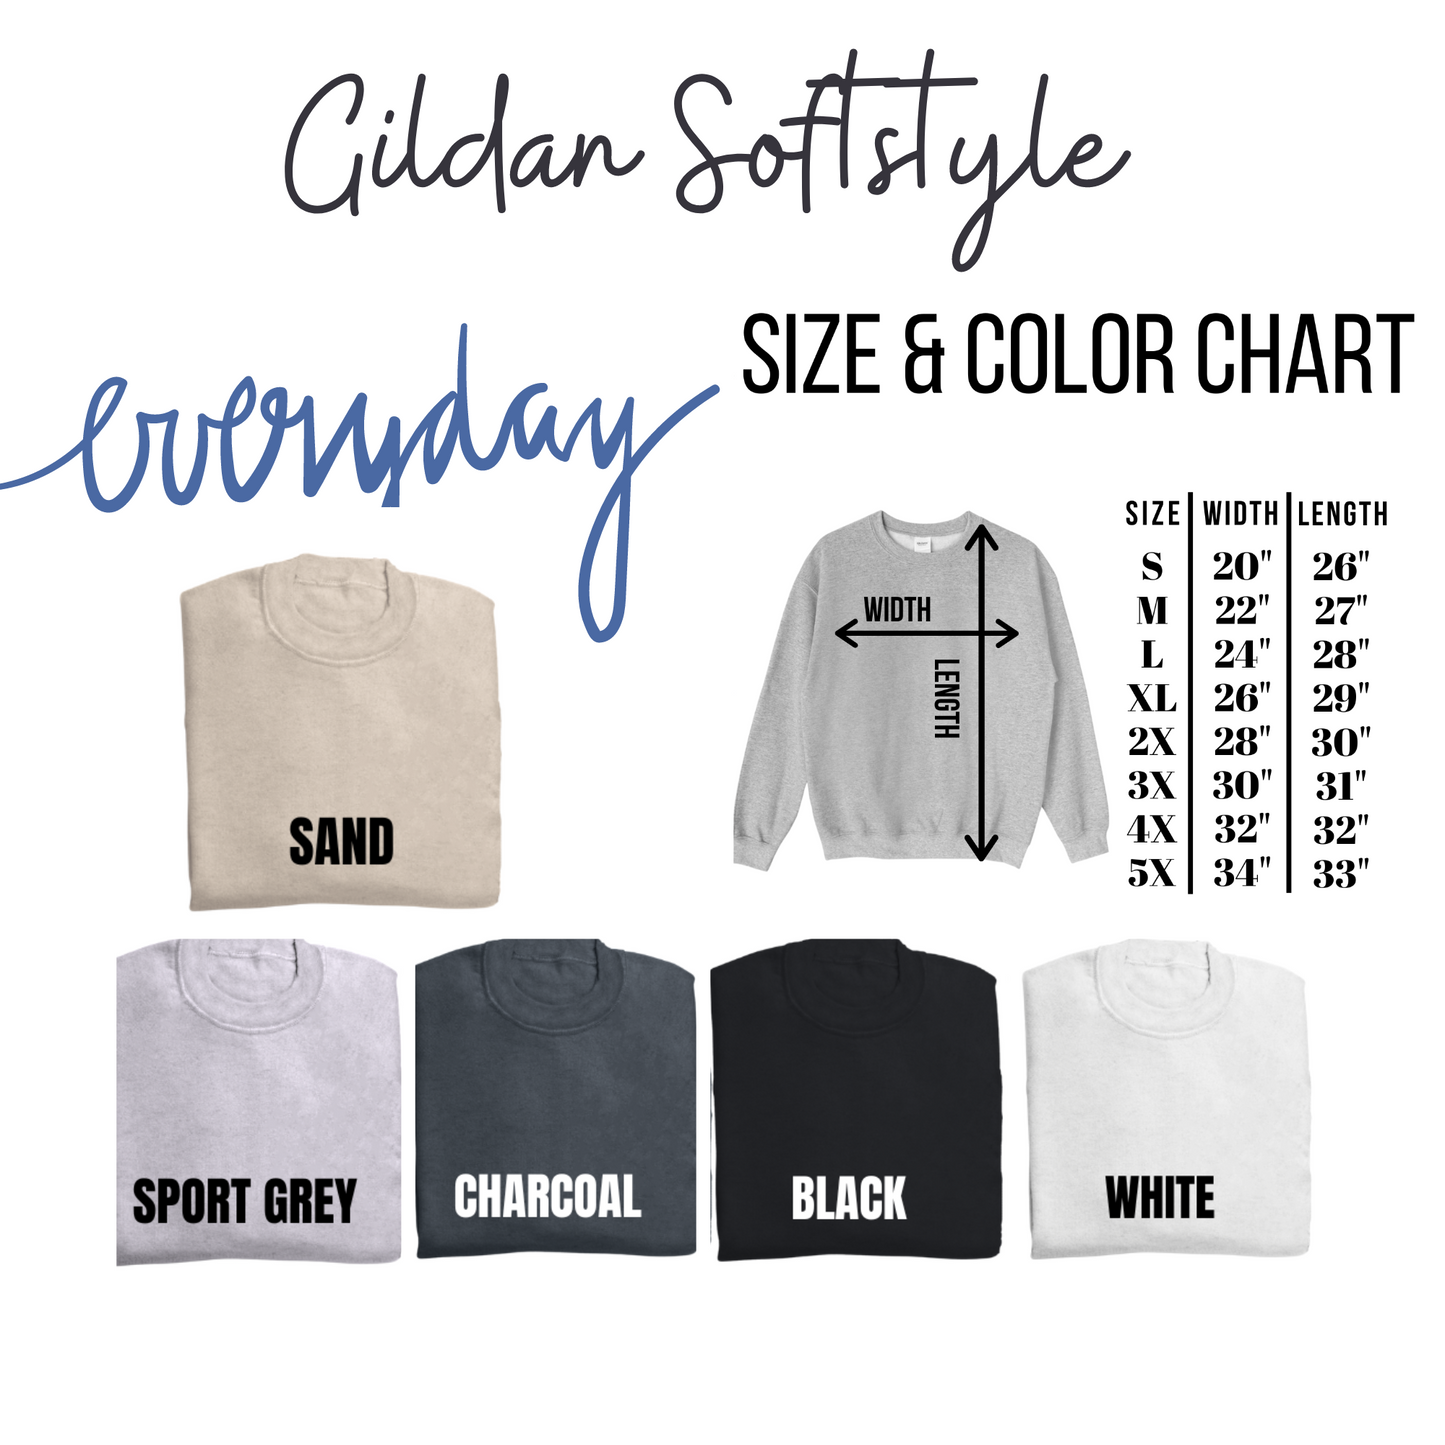 Merry Grinch's Gildan Softstyle T-shirt or Sweatshirt